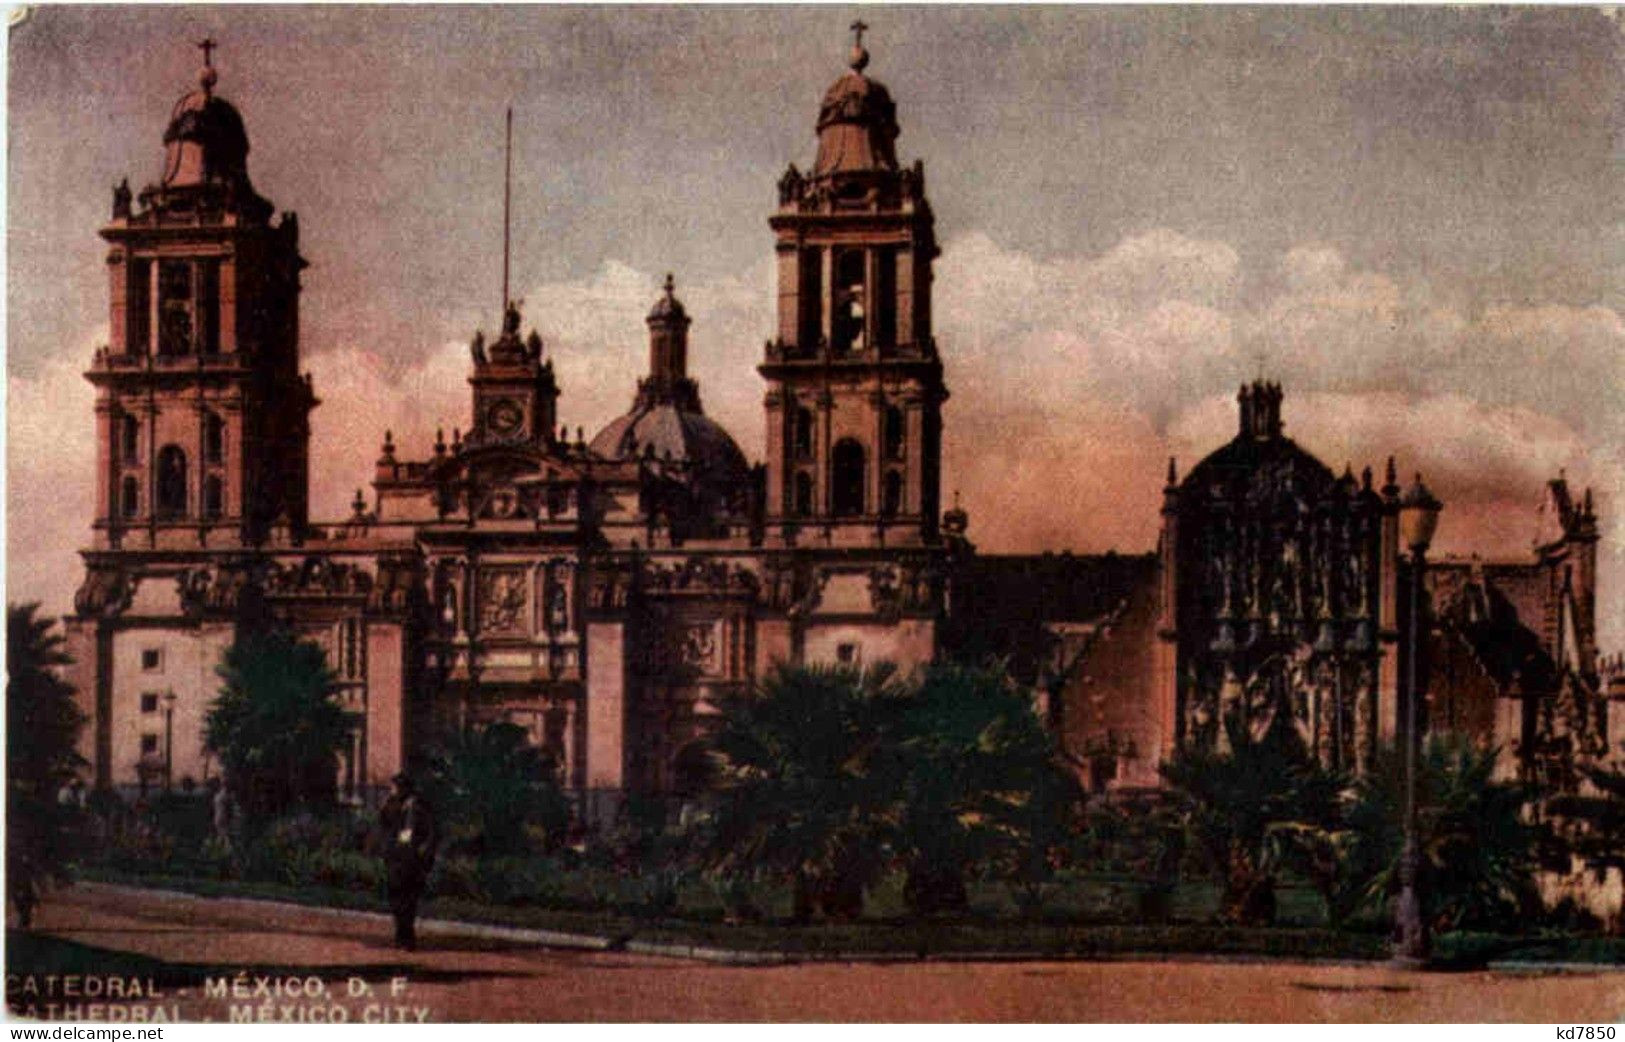 Mexico City - Cathedral - Mexiko